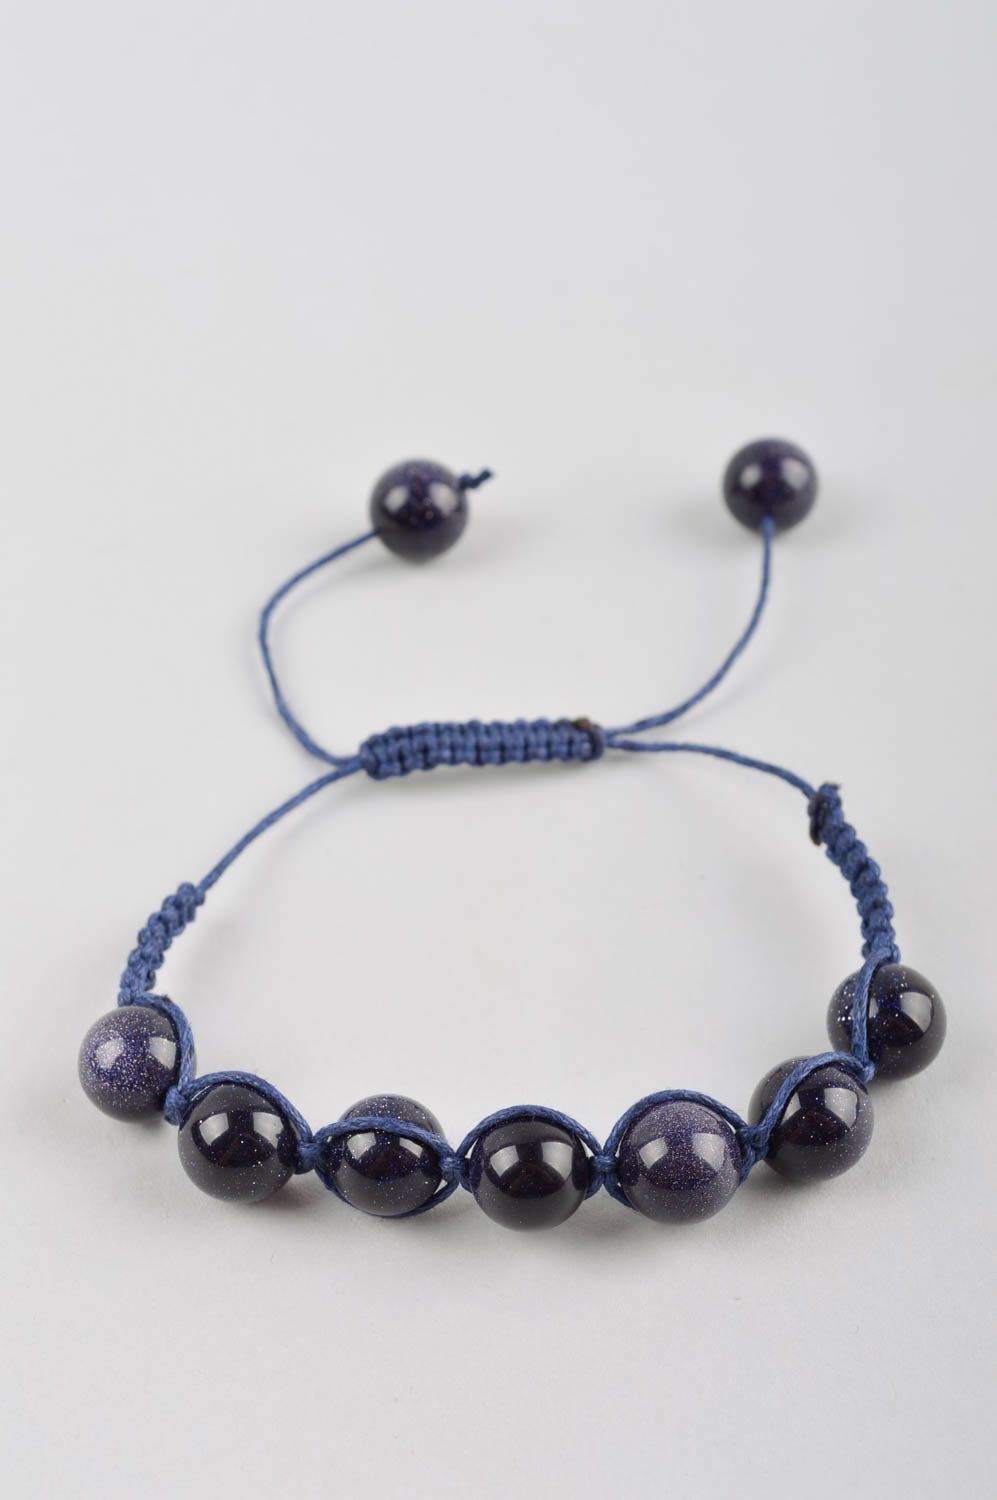 Unusual handmade woven cord bracelet charm bracelet artisan jewelry designs photo 2